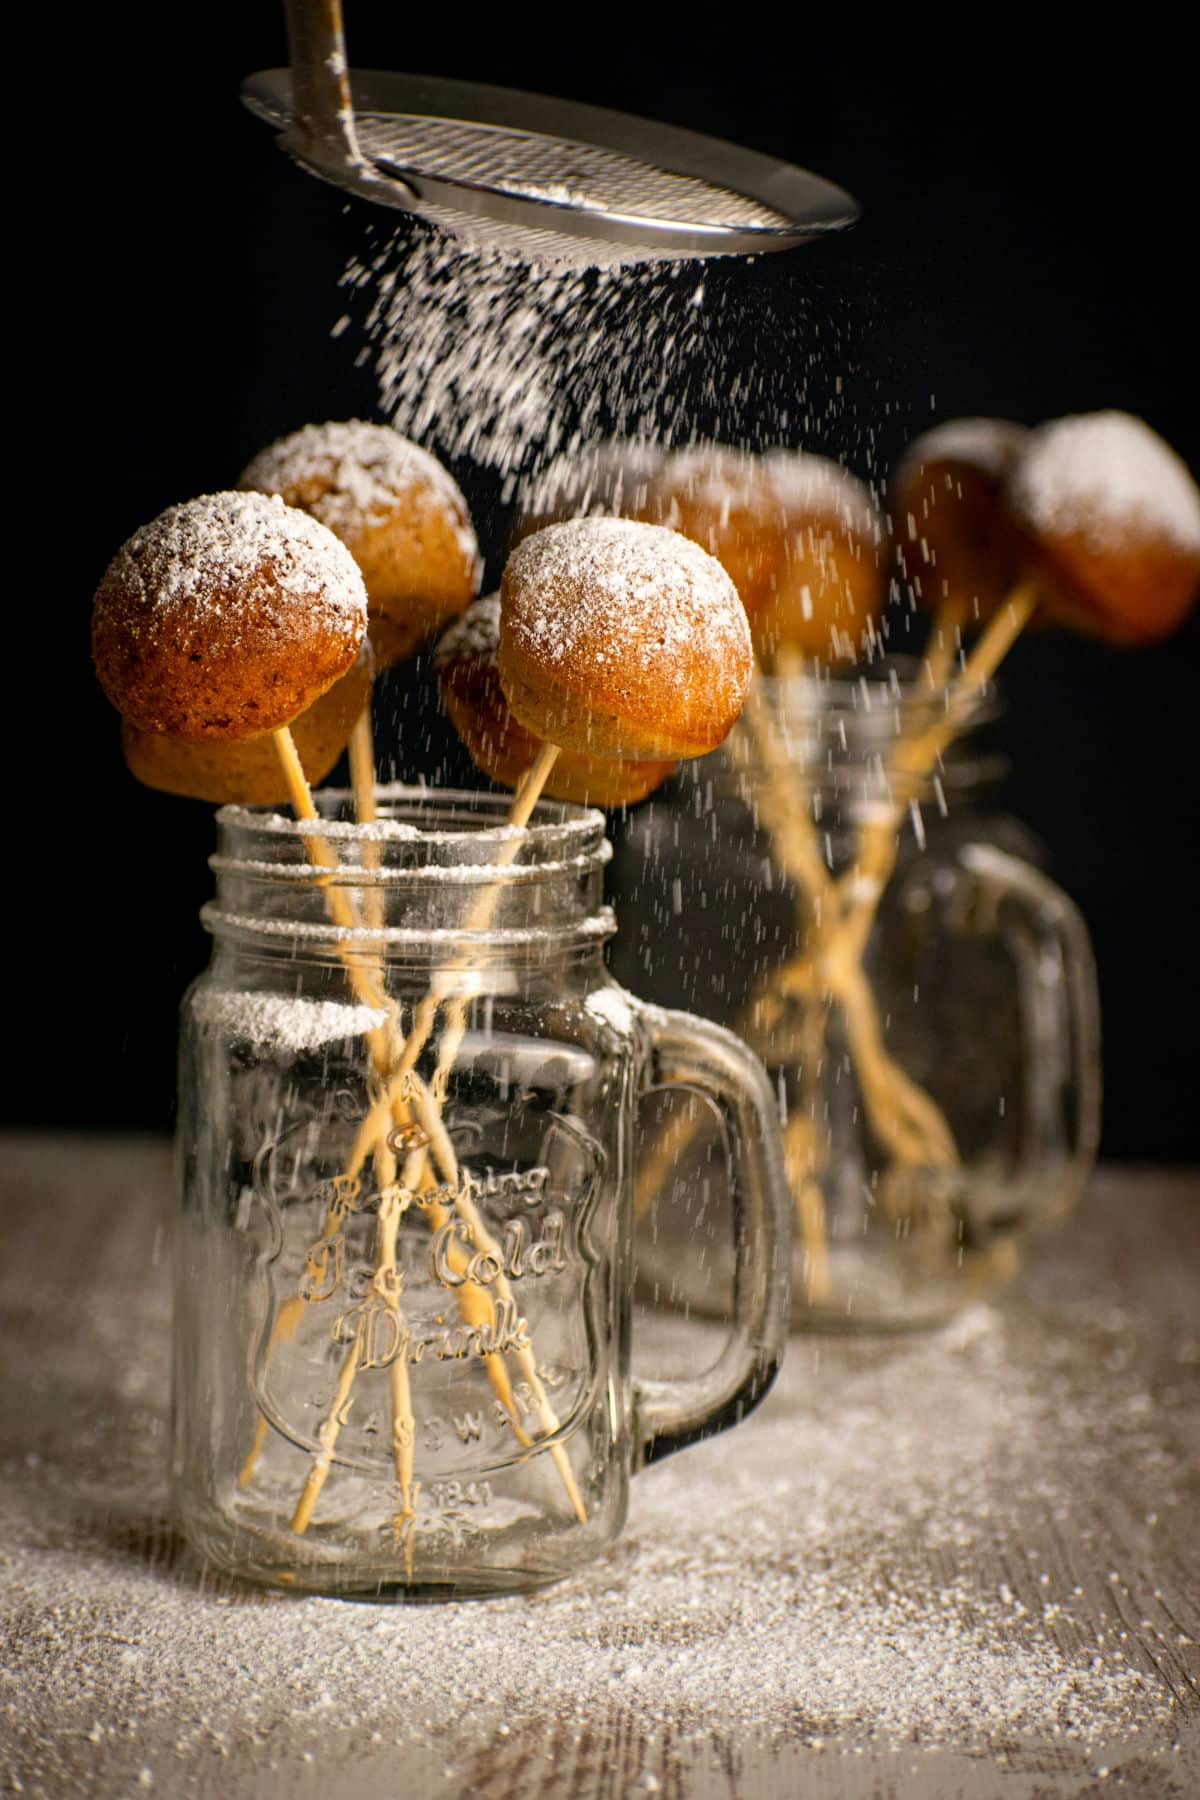 Pumpkin cake pops in a jar with powdered sugar.